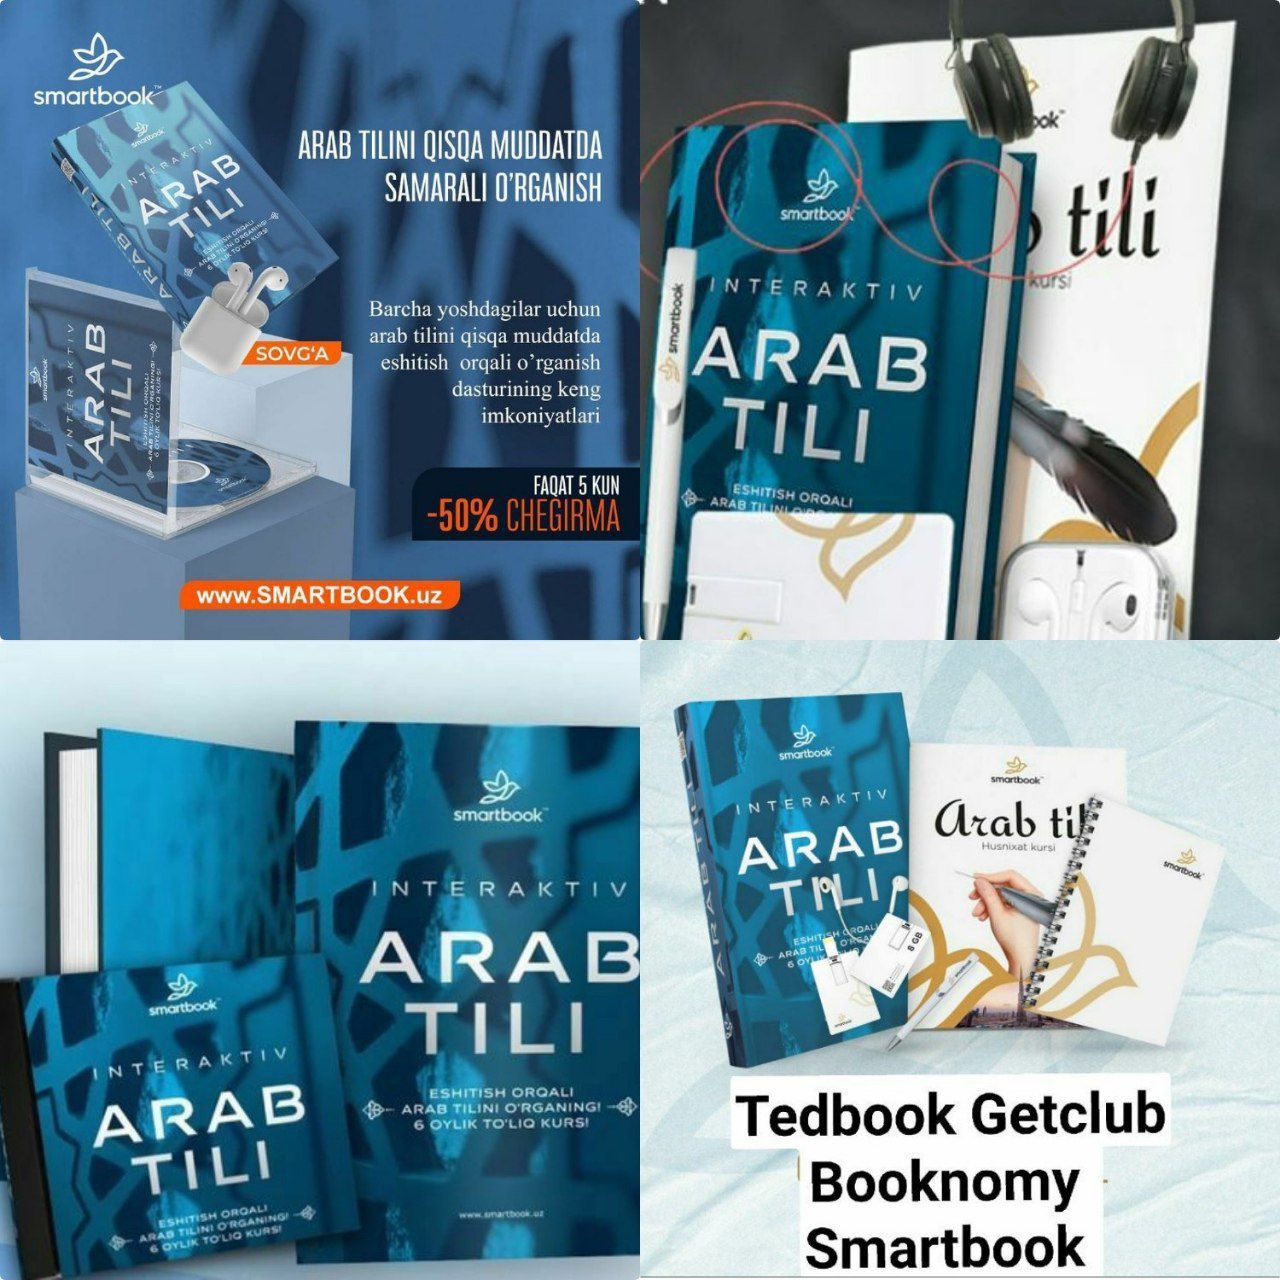 Tedbook booknomy smartbook getclub natural ingliz tilidan eshitish ok